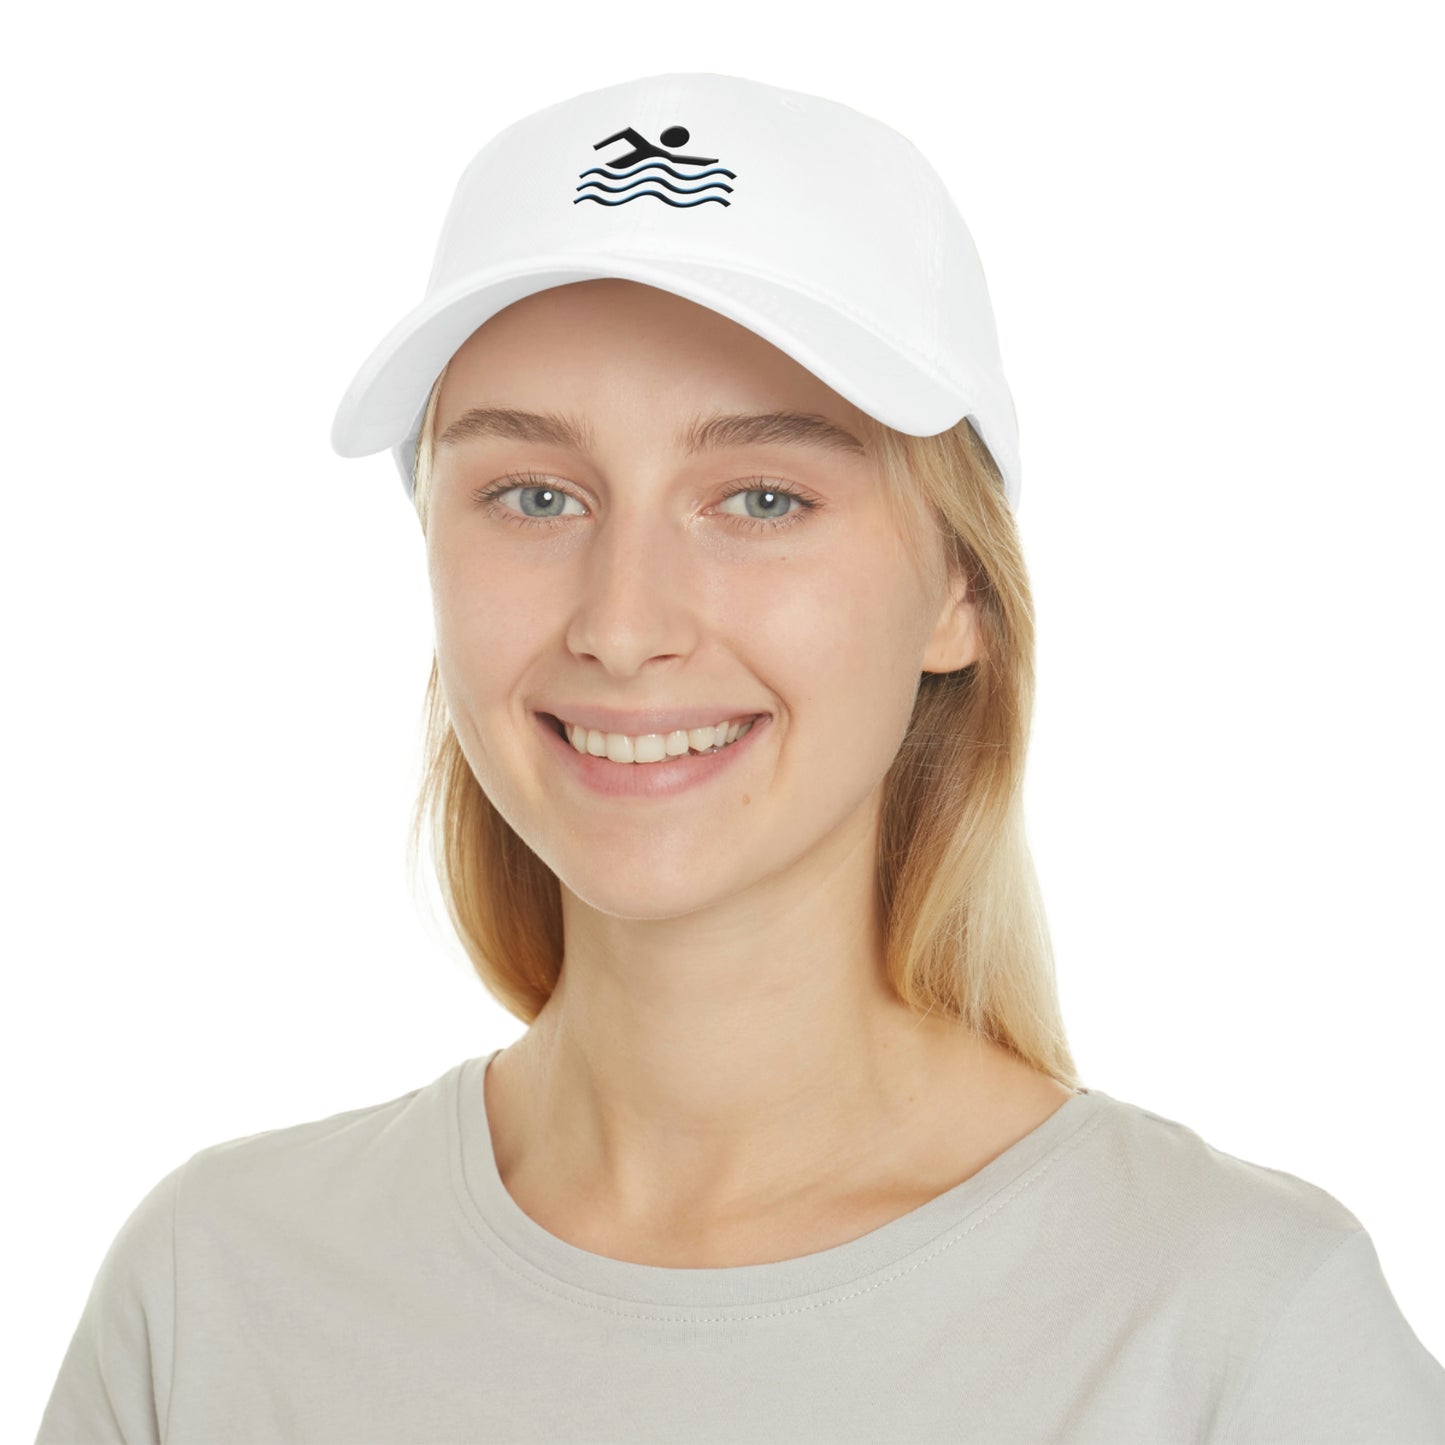 Swimmer Themed Hat: Low Profile Baseball Cap